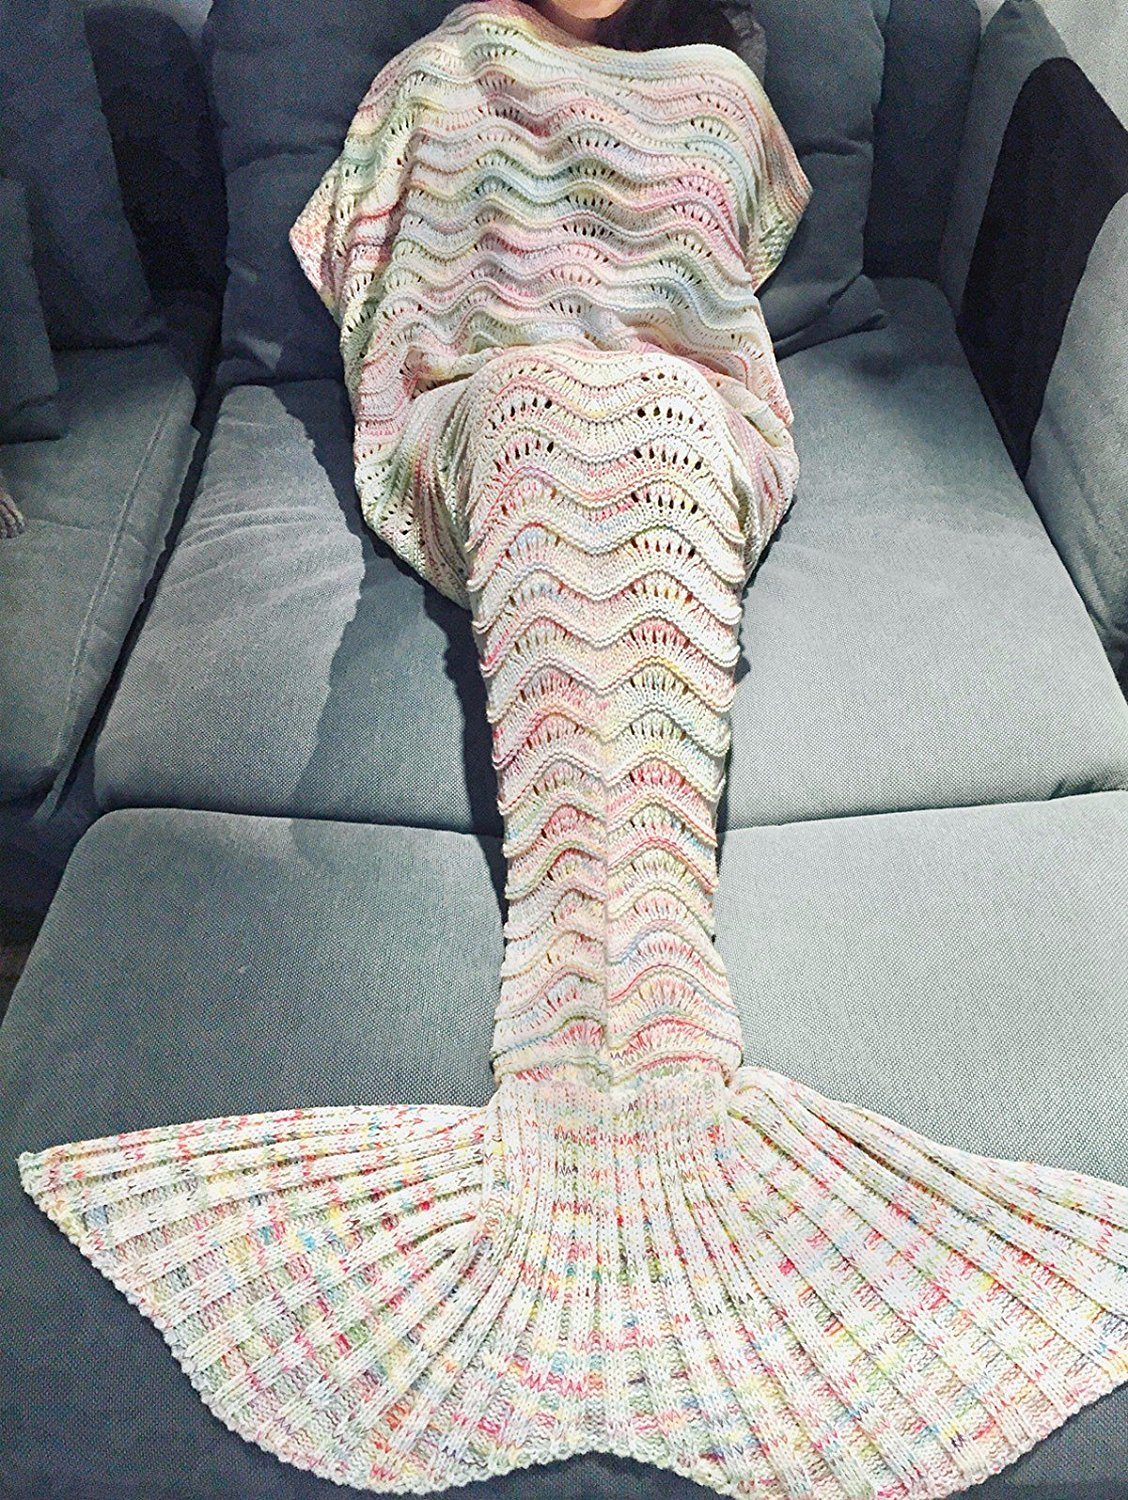 Handcrafted Mermaid Tail Blanket Crochet Knitting Sofa Blanket Rug Soft Sleeping Bag For Adult Teens